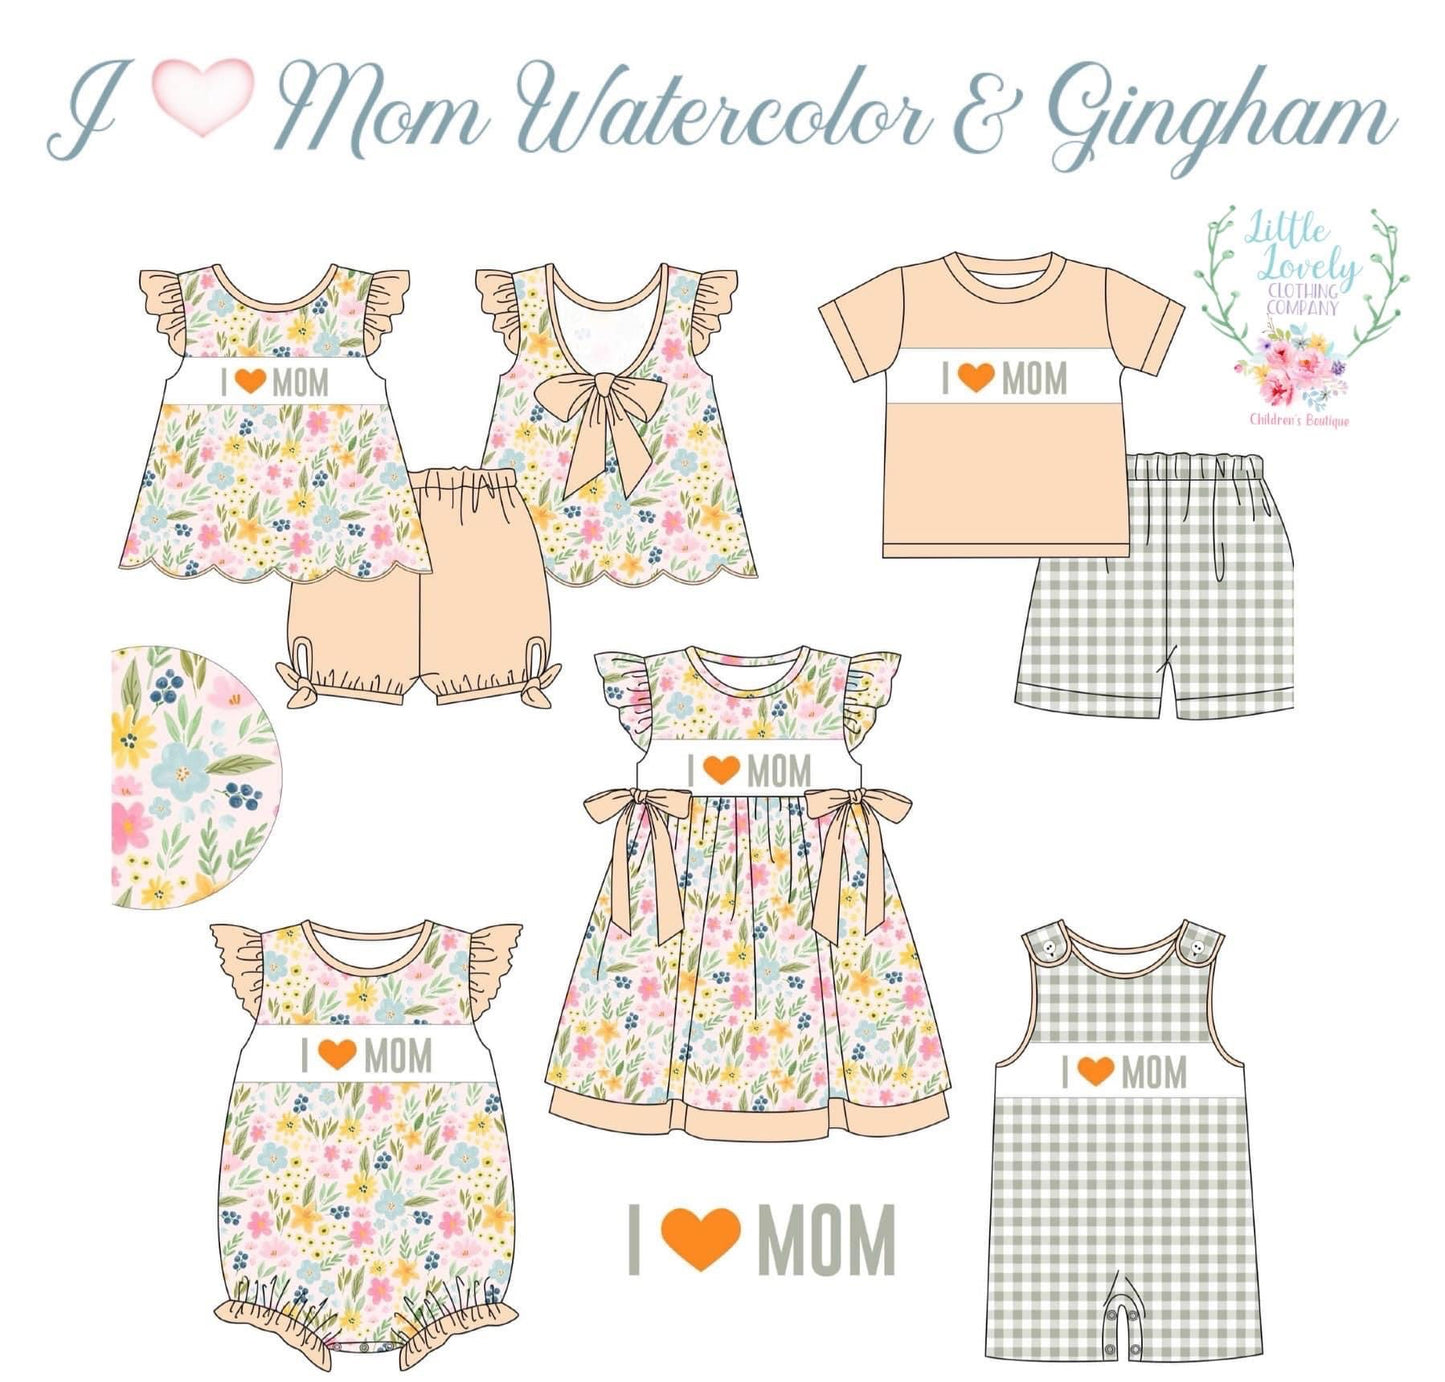 I Love Mom Watercolor & Gingham Pre-Sale ETA to Customer Mid April